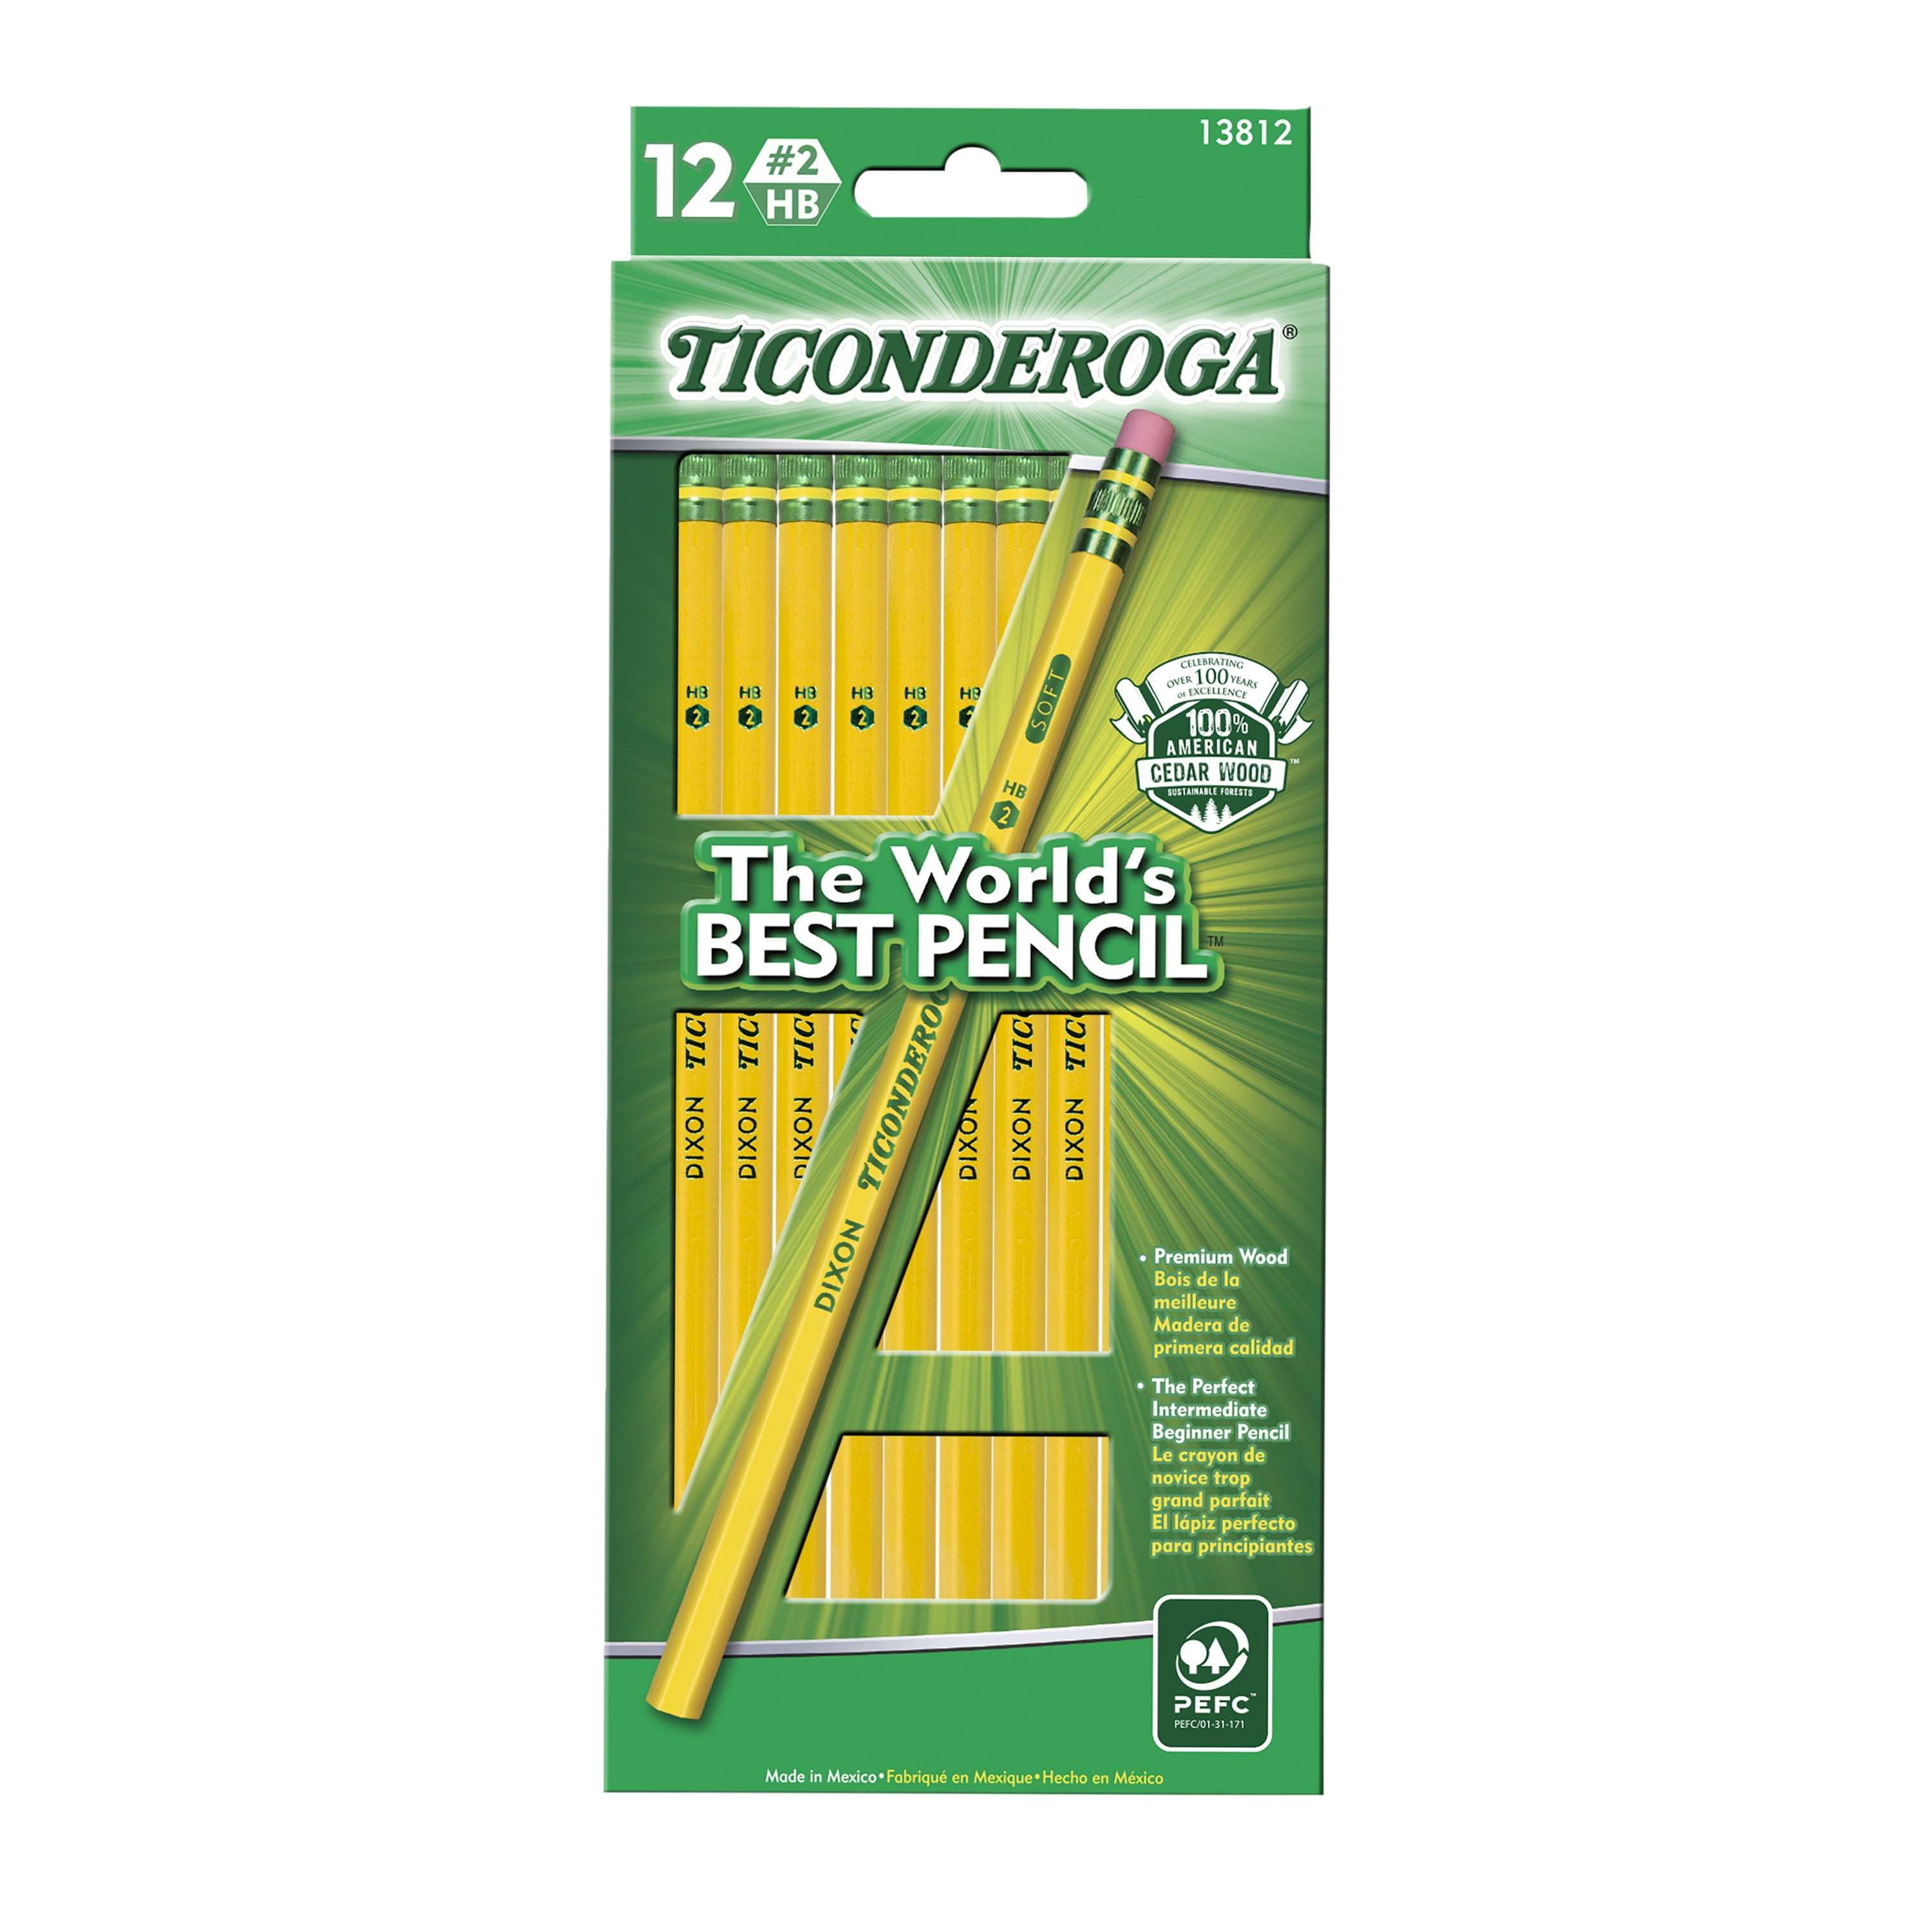 Star Wars Wooden Pencils School Supplies Pencils Party Favors 